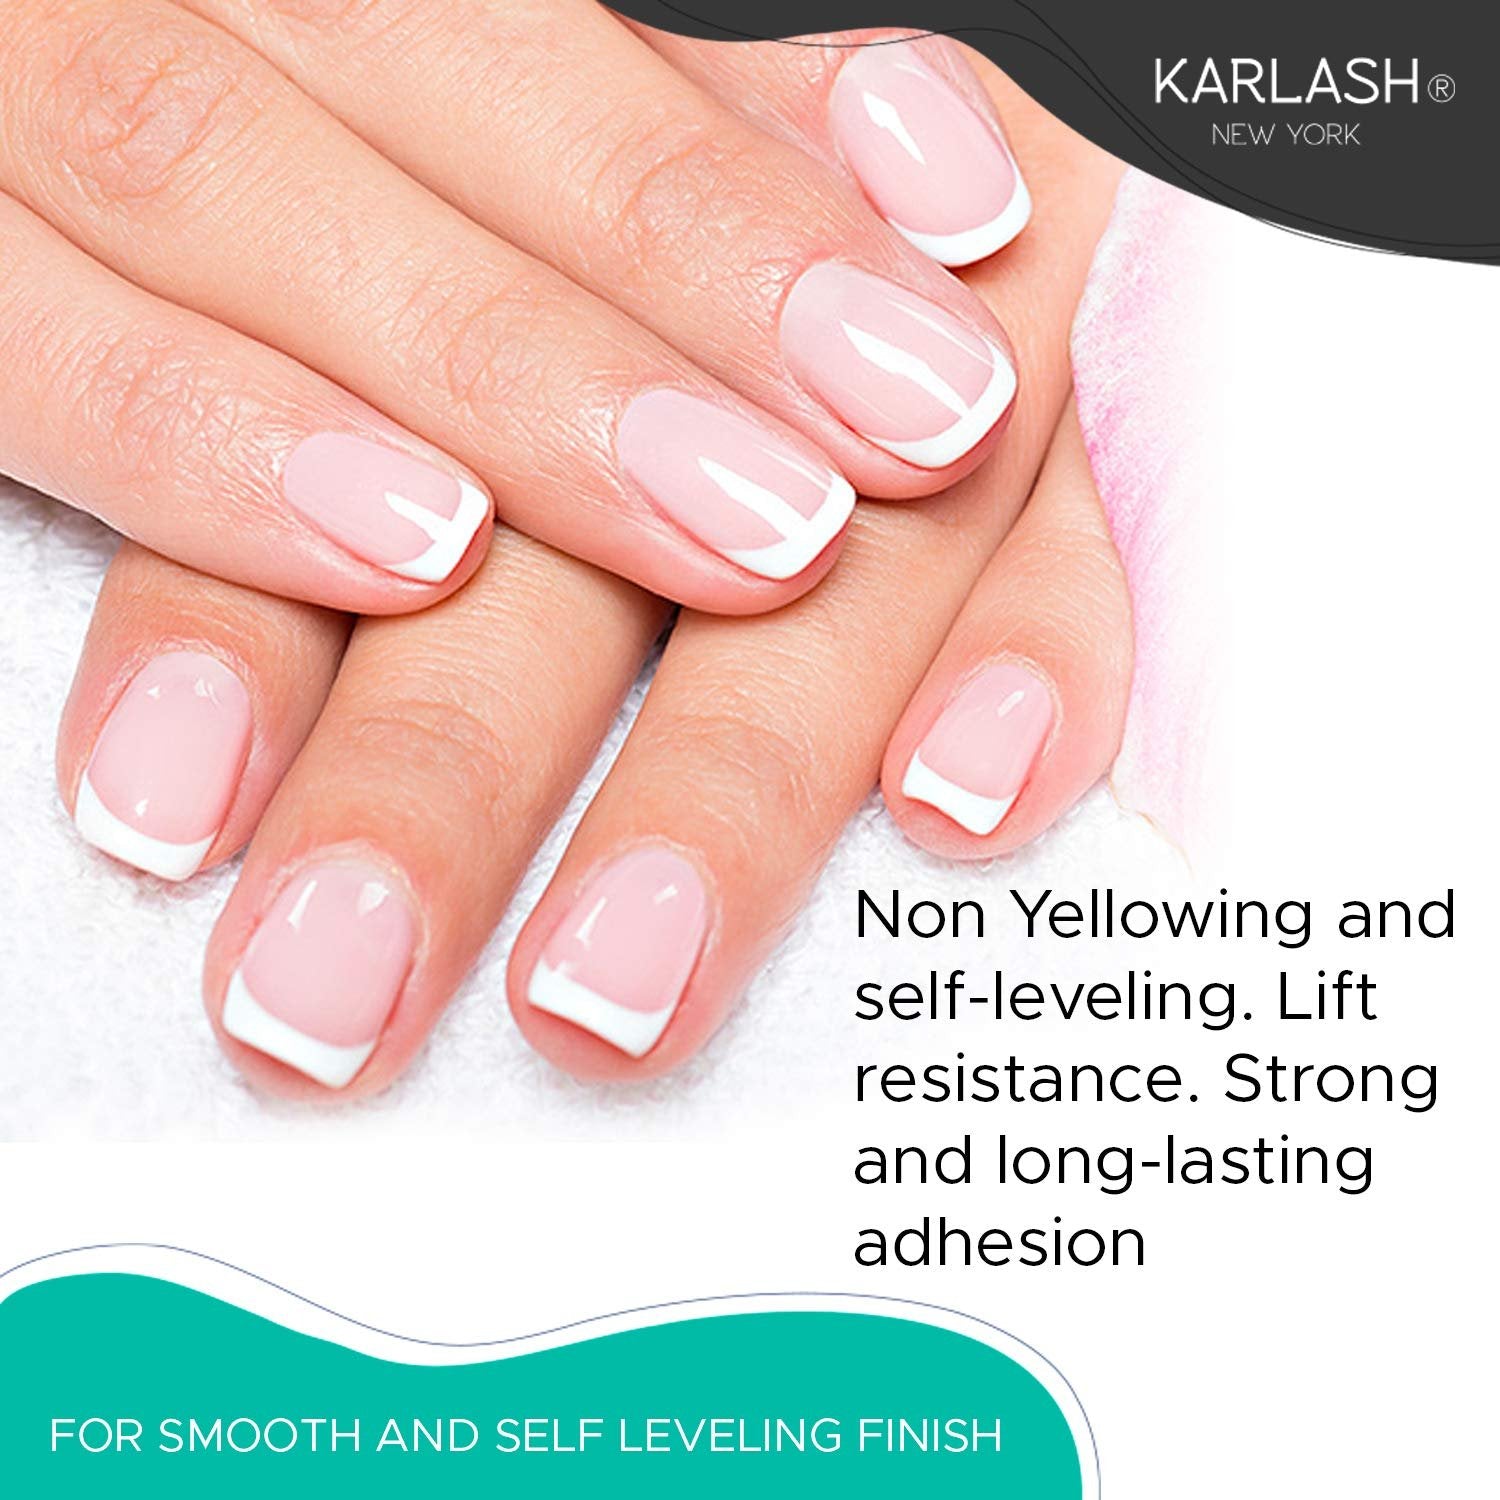 Karlash Professional Acrylic Powder Medium Pink 0.5 oz